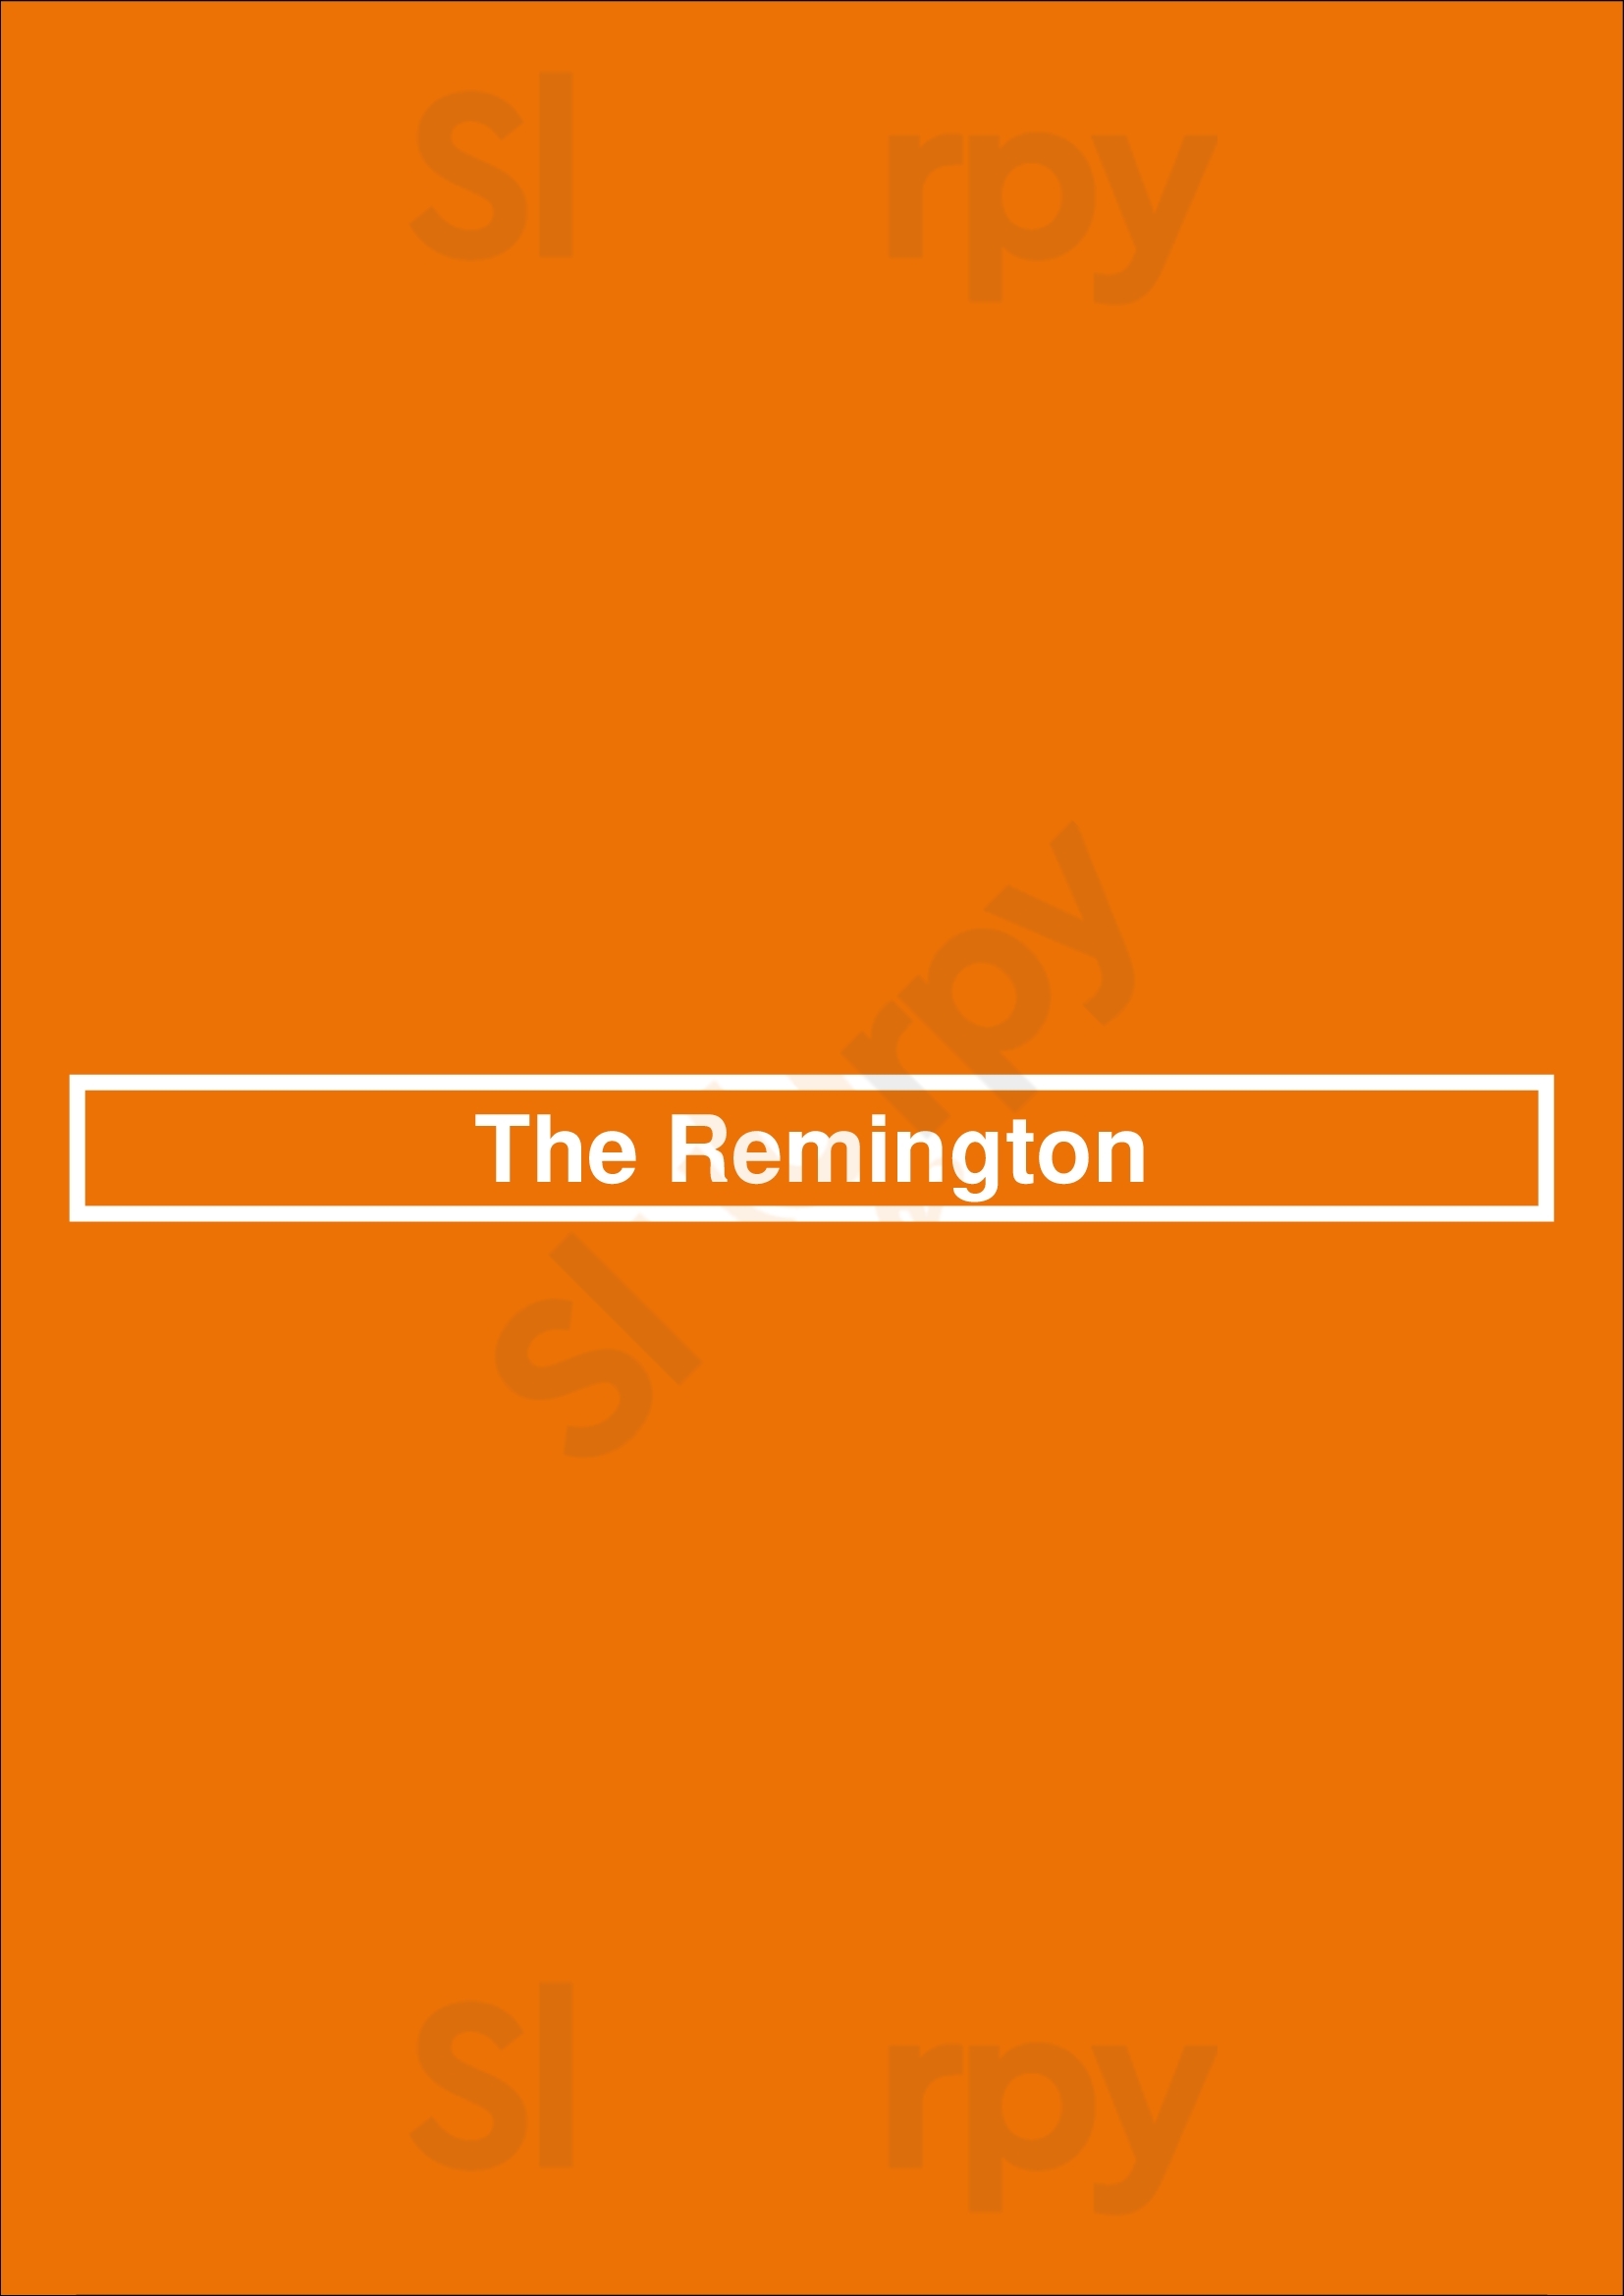 The Remington Houston Menu - 1